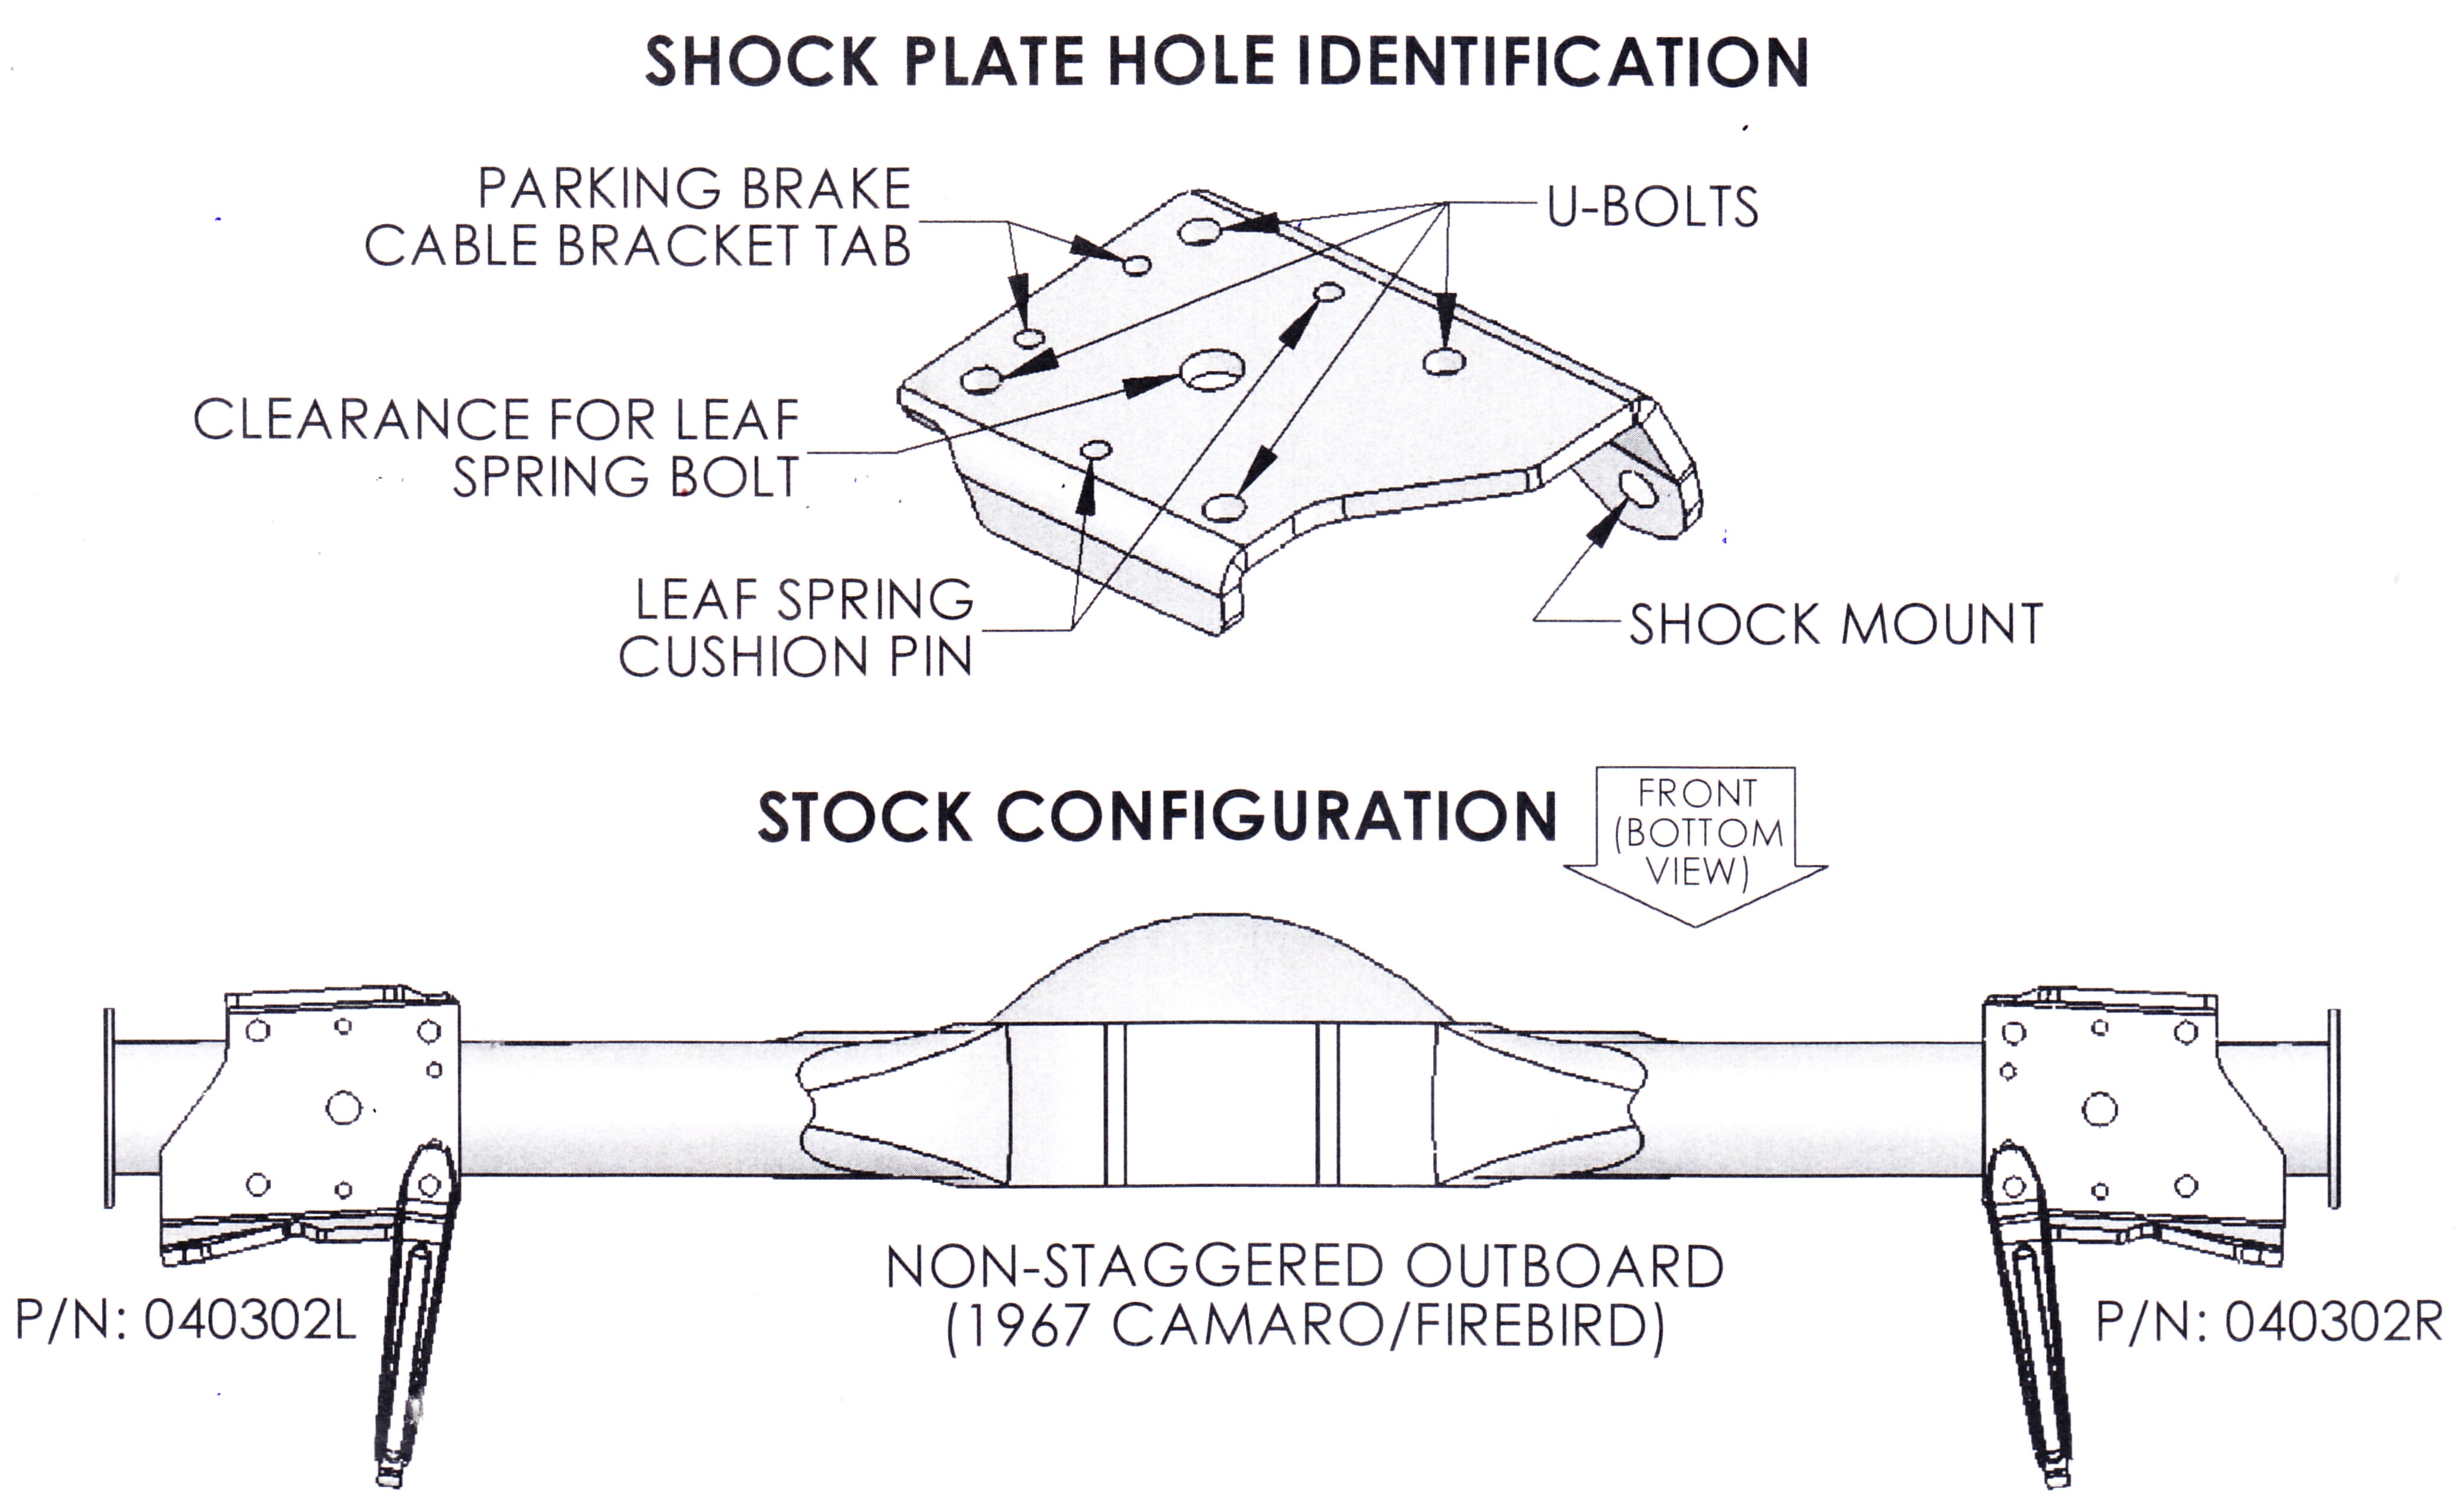 1967 1969 pontiac firebird shock mount